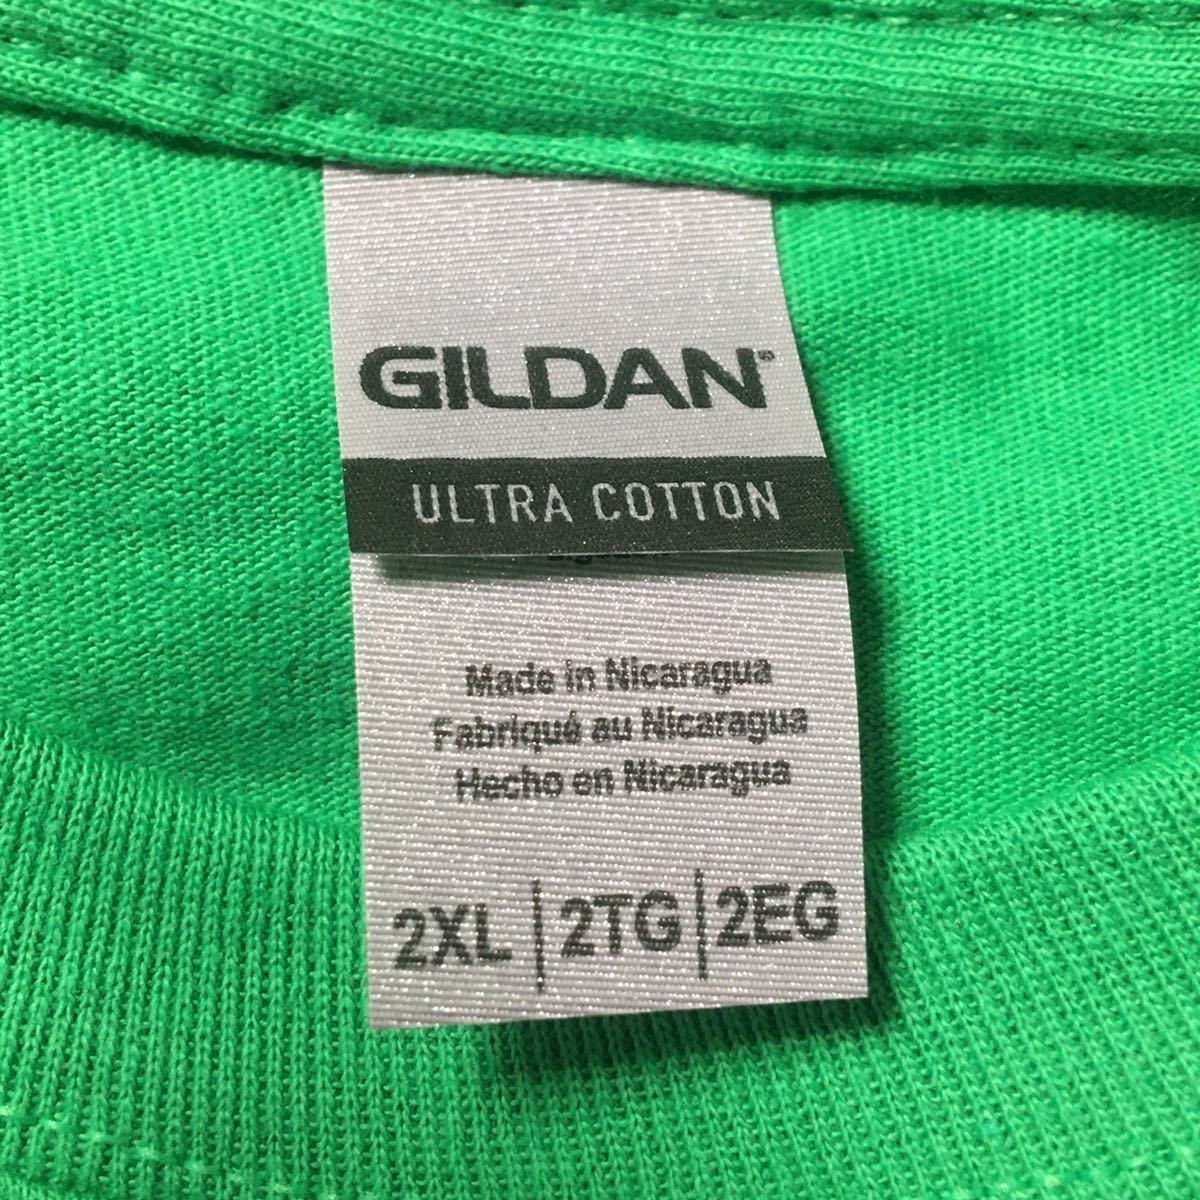 GILDAN アイリッシュグリーン 2XL サイズ 緑色 ロンT 長袖無地Tシャツ ポケット無し 6.0oz ギルダン☆_画像2